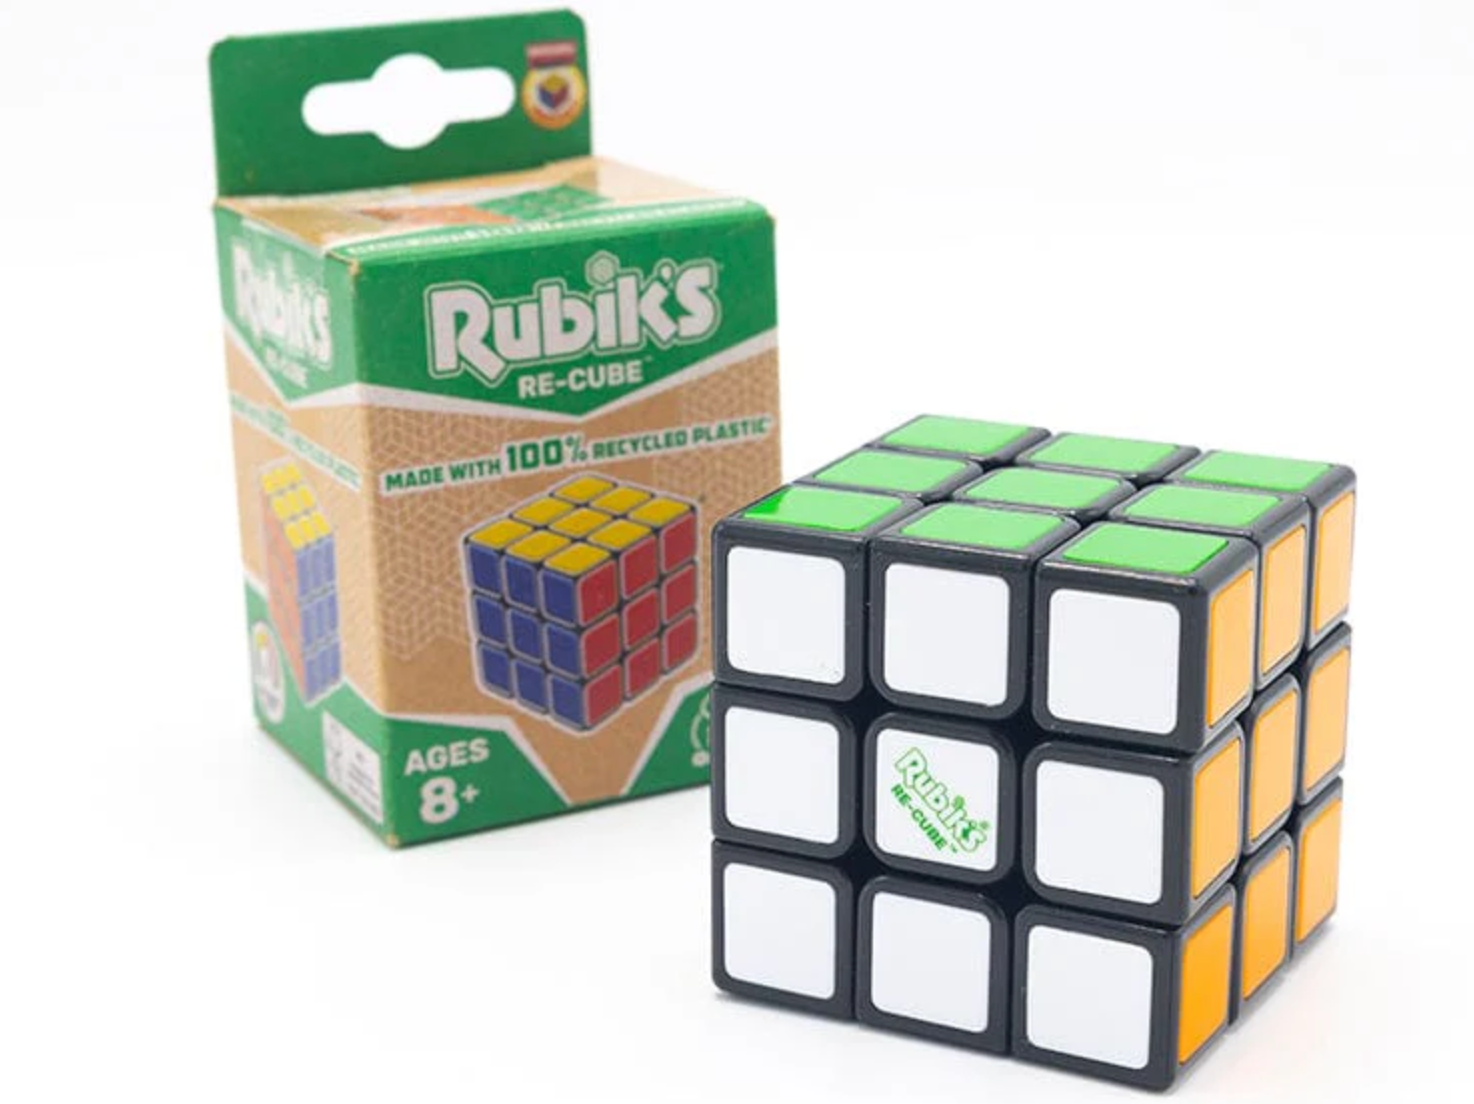 RUBIK'S: RE-CUBE - ORIGINAL 3X3